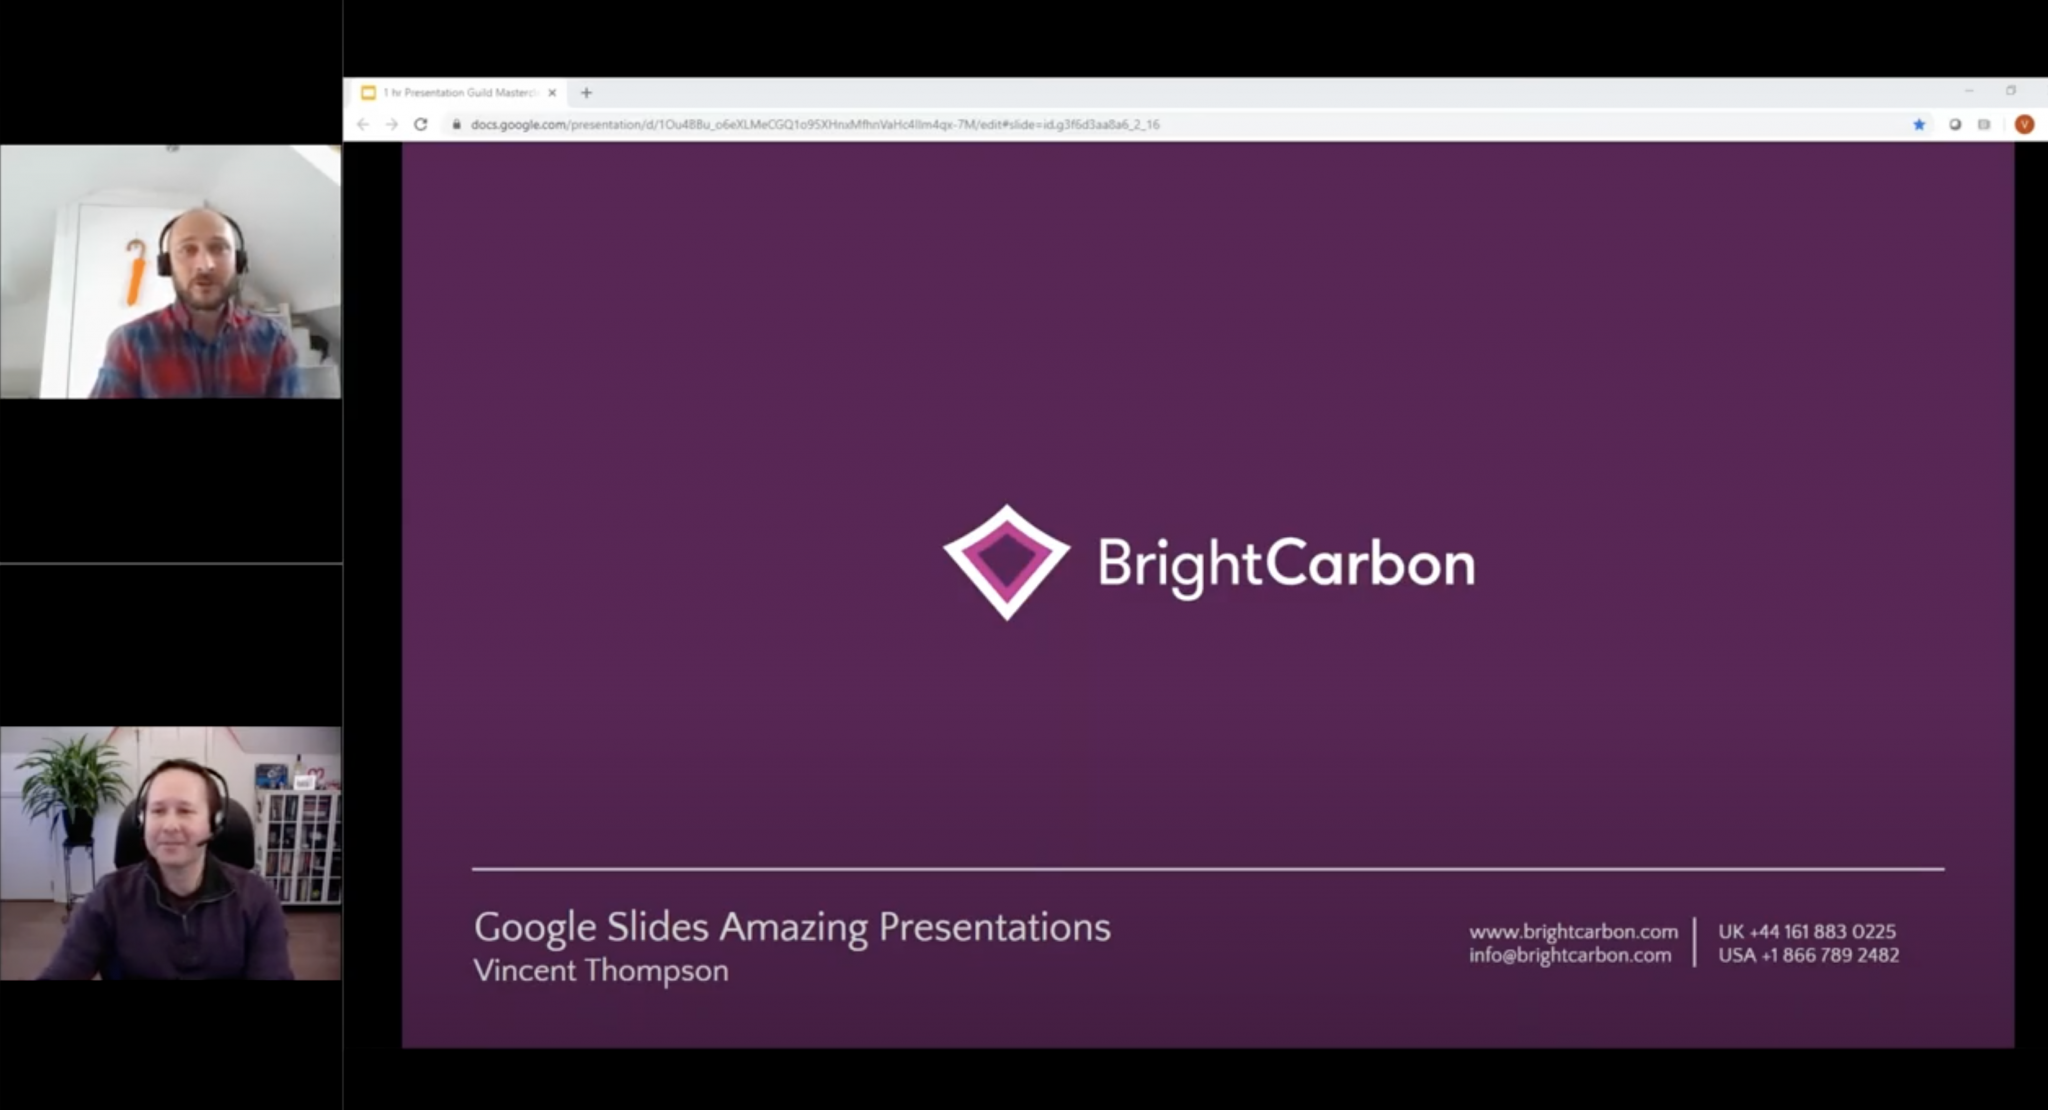 Amazing Presentations with Google Slides